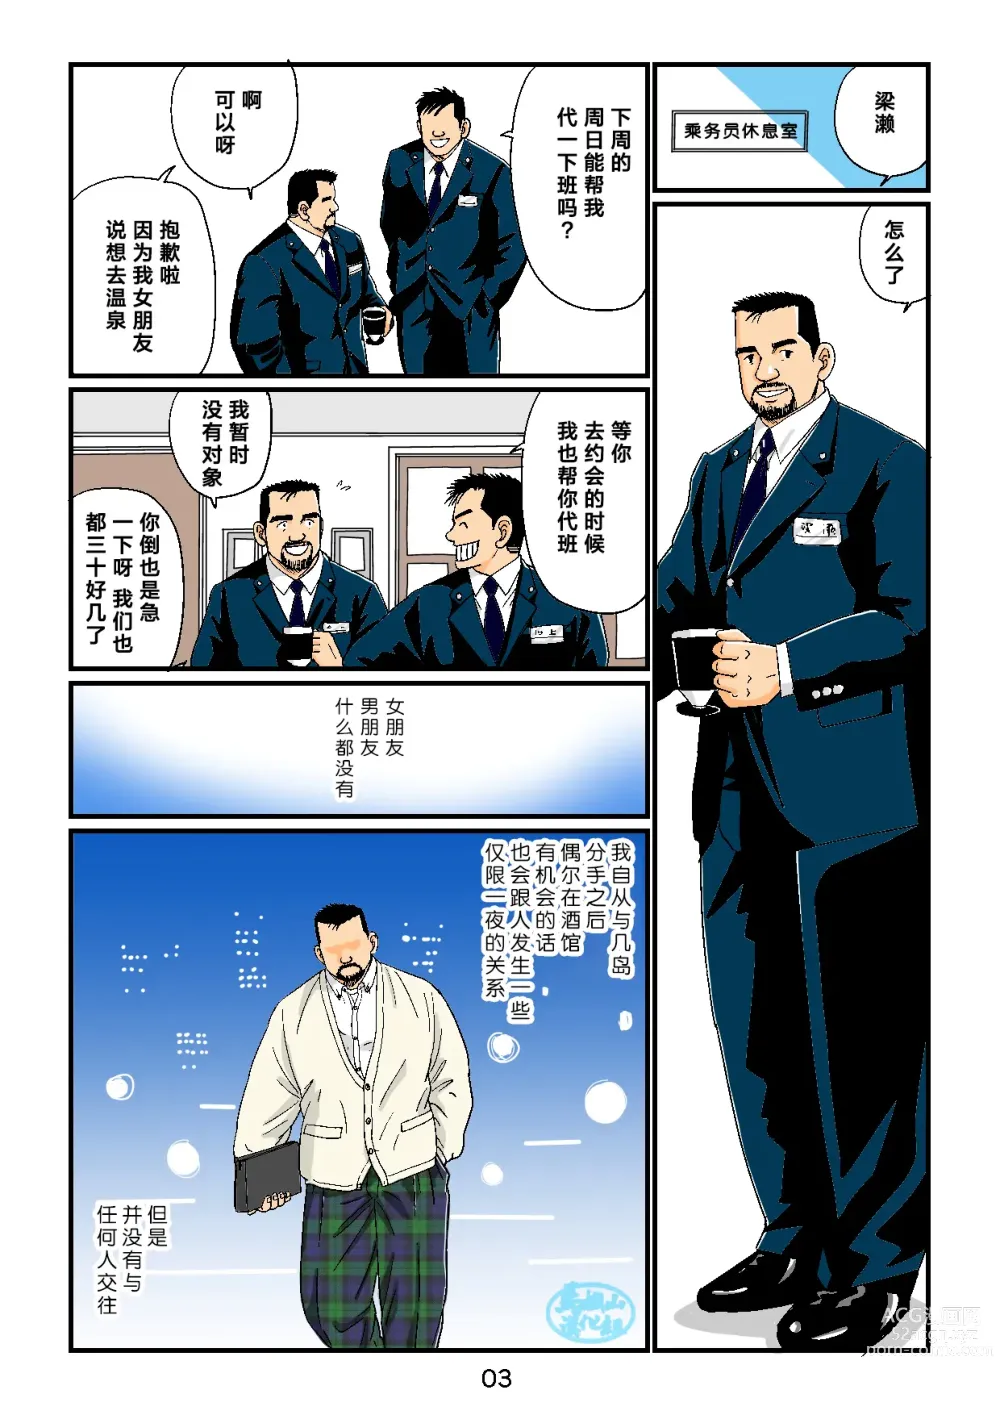 Page 3 of manga 「铁道员的浪漫」 第三回 站长与铁道员之夜